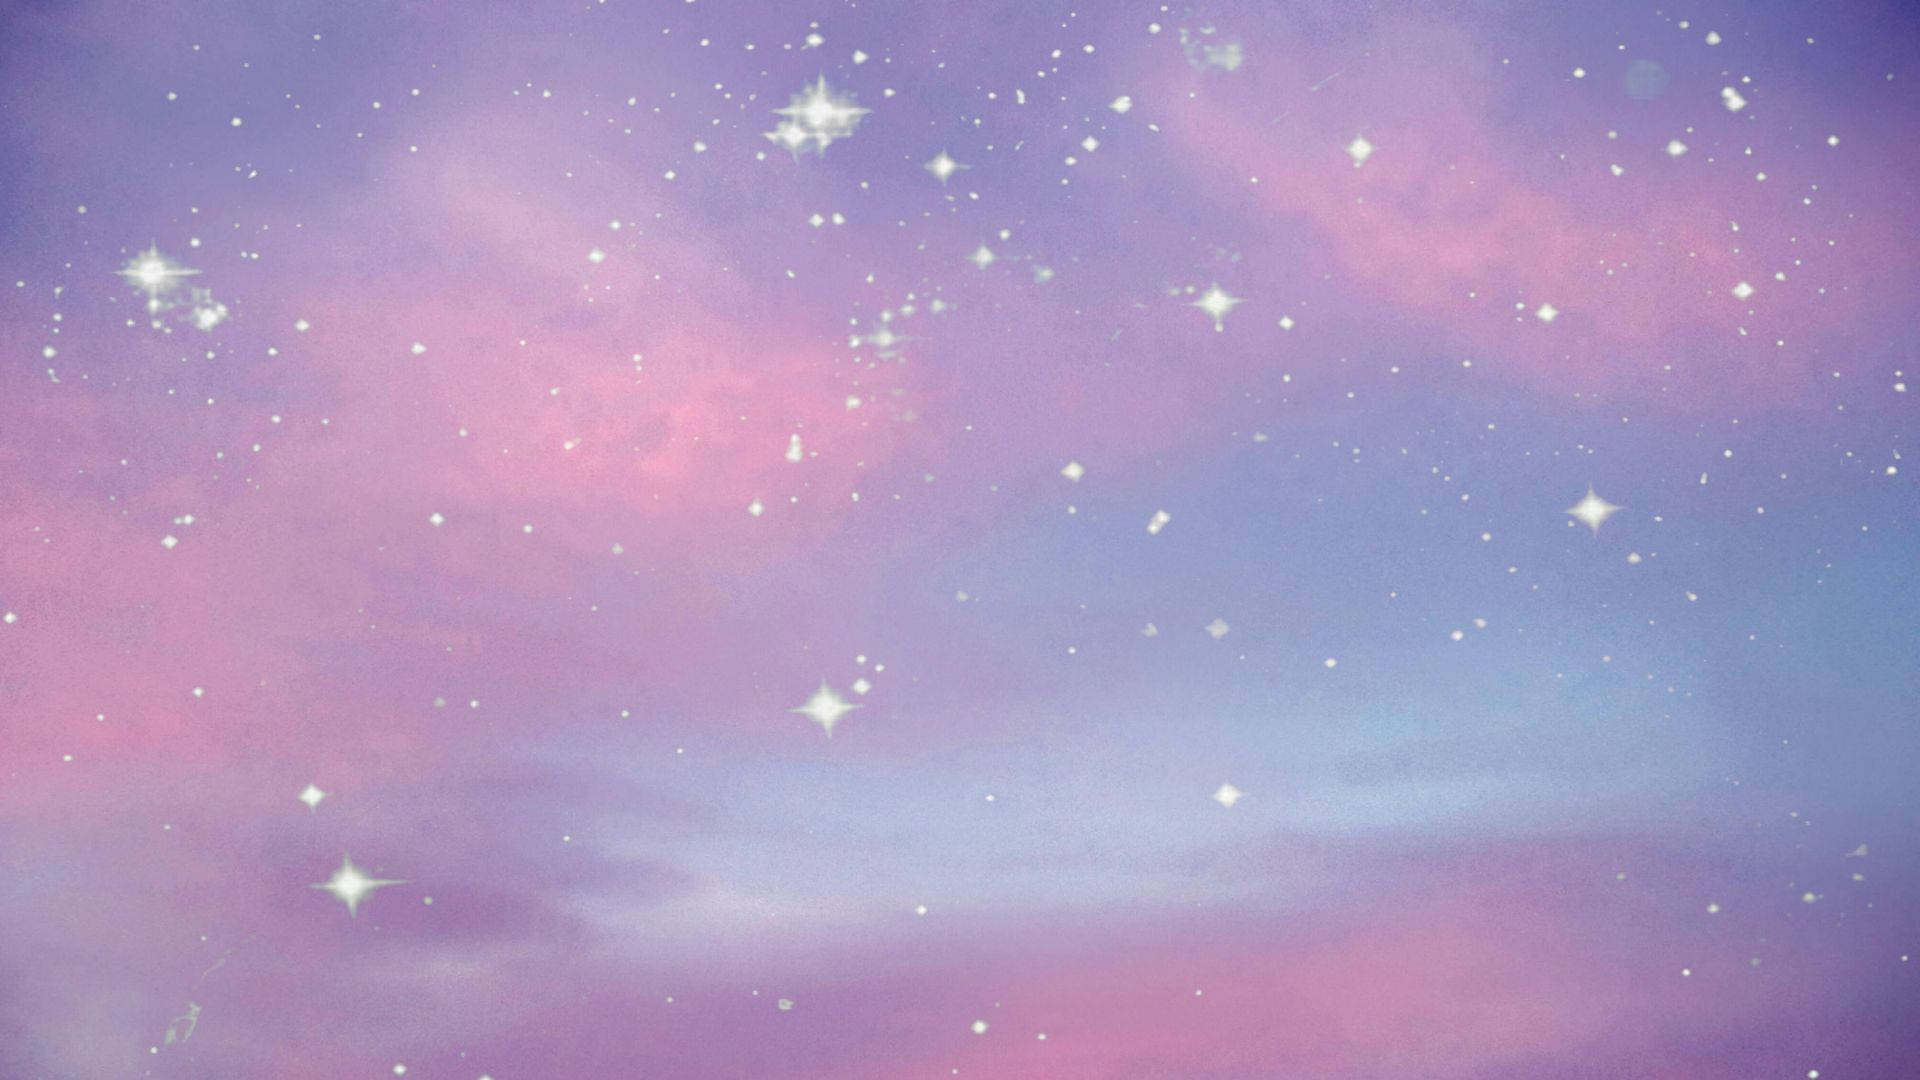 Stars Shining In A Cute Galaxy Wallpaper